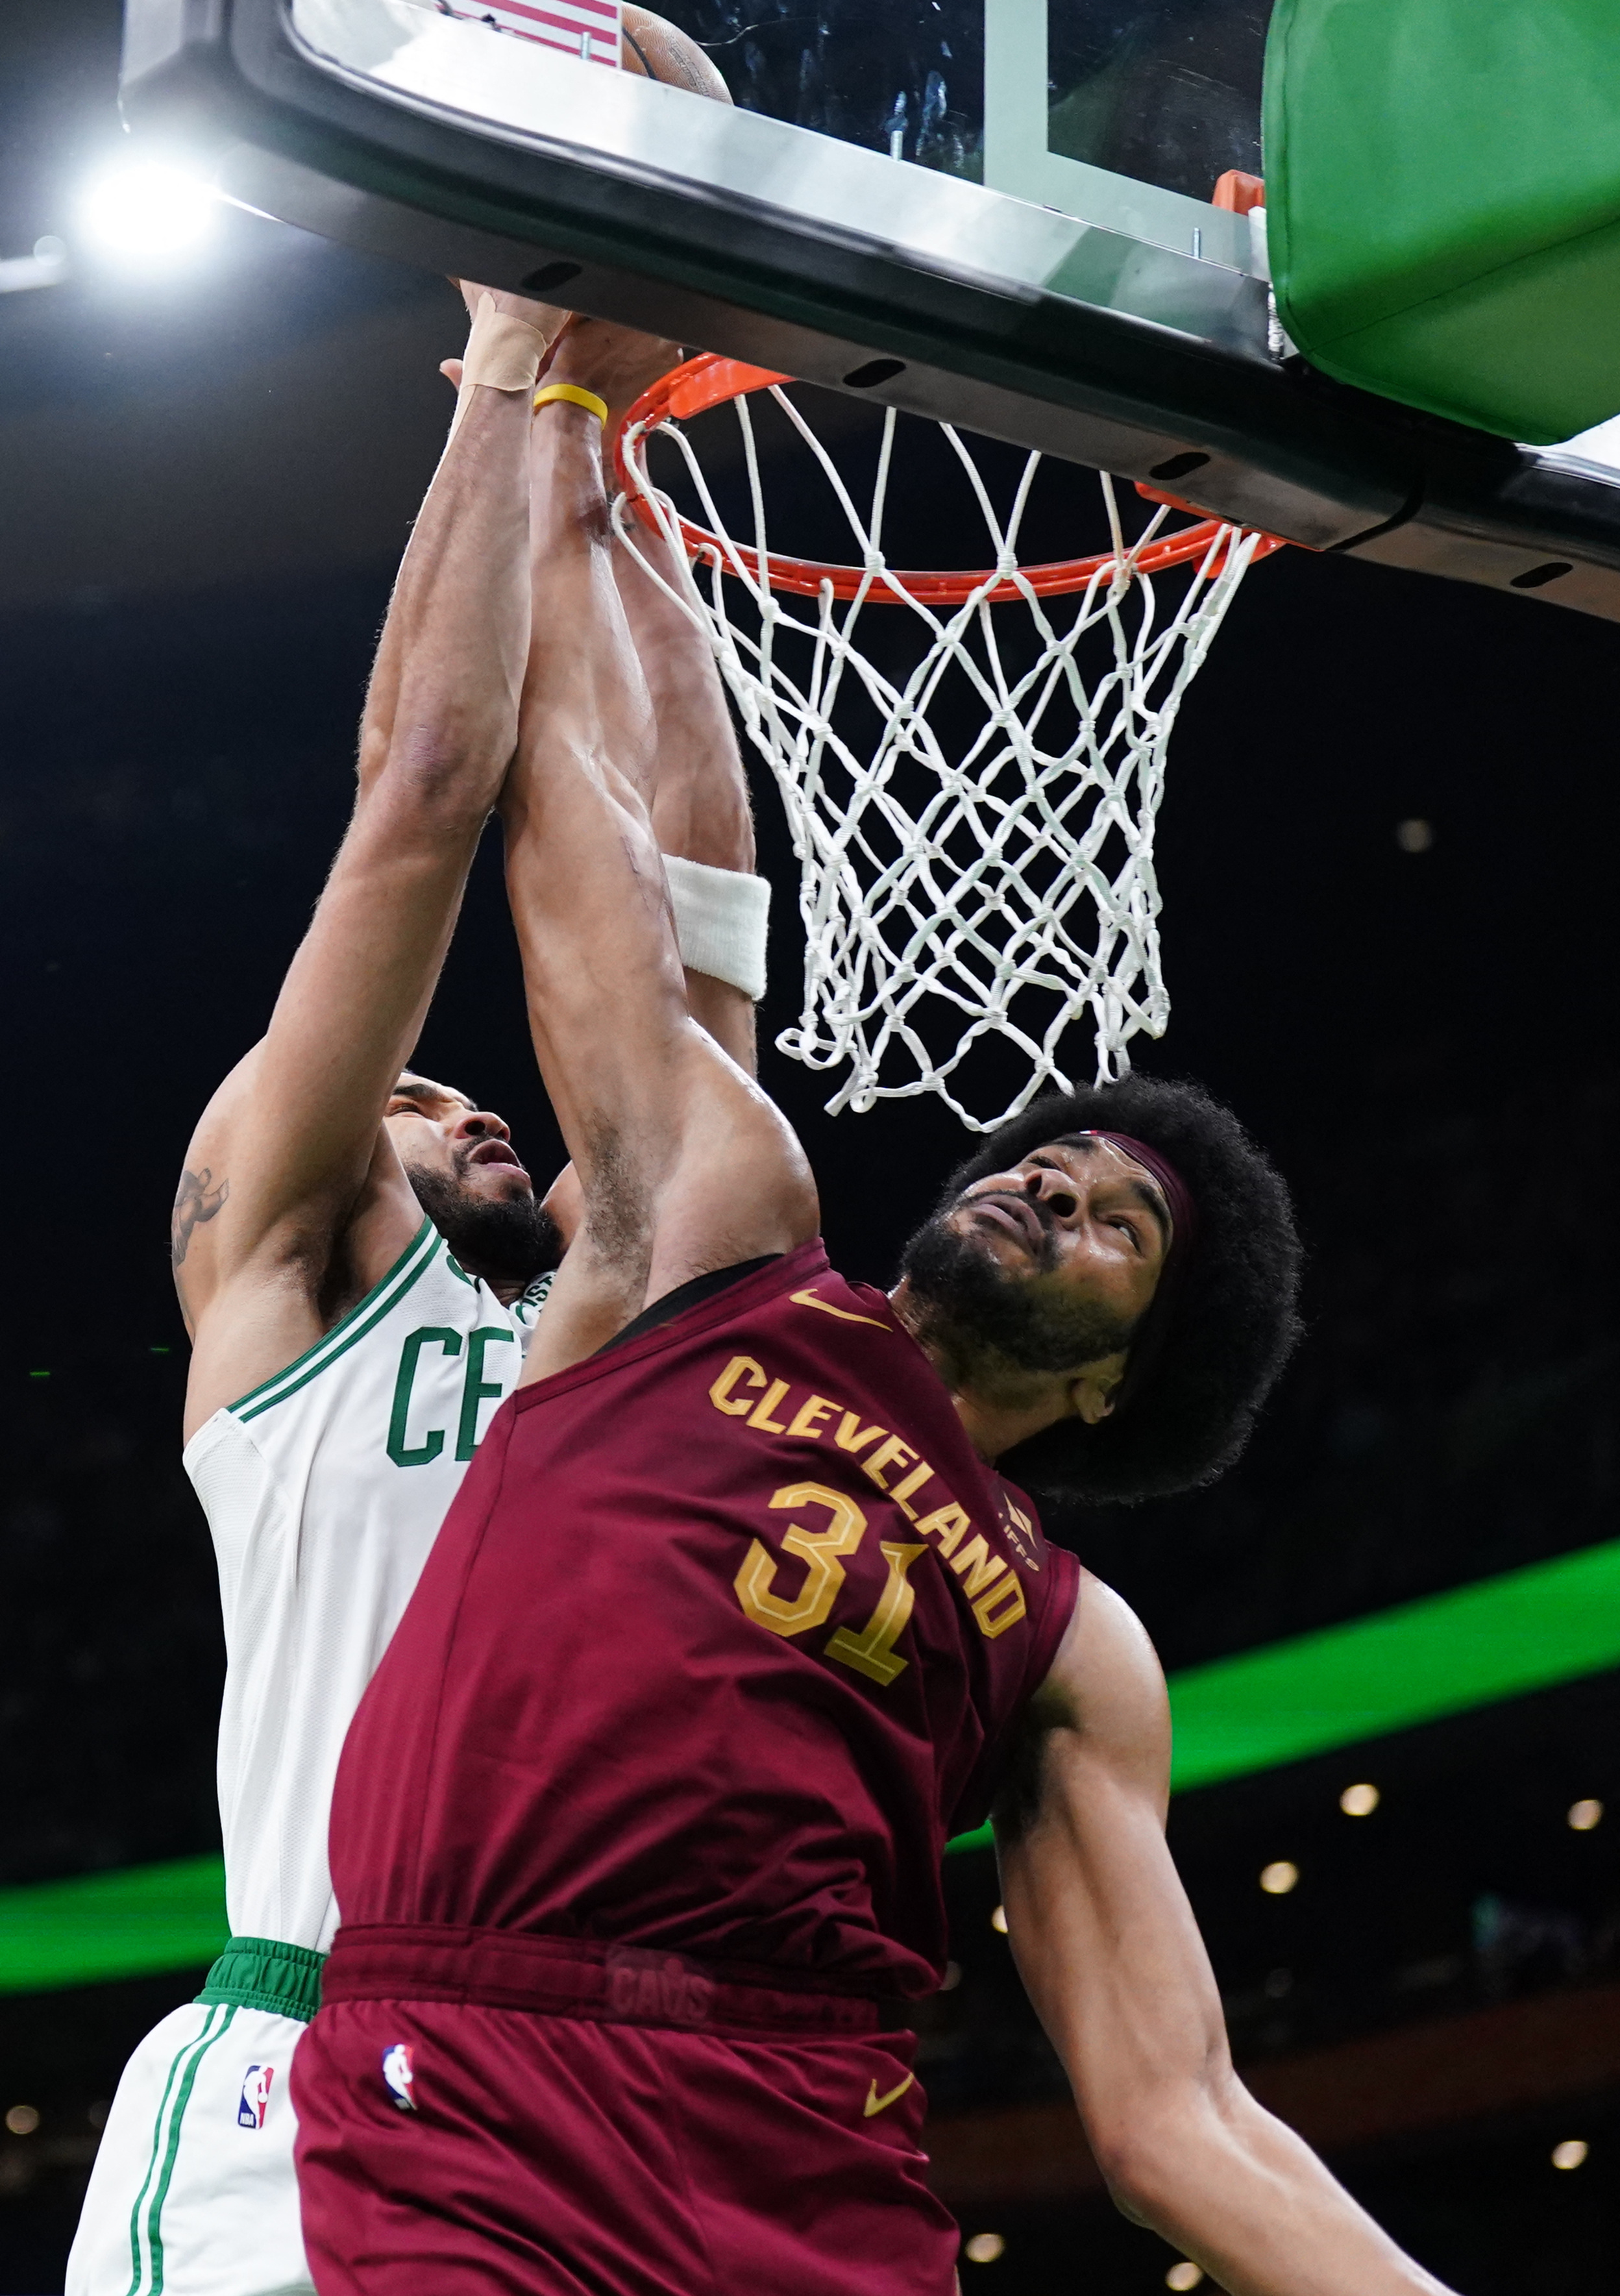 Celtics sink Cavs, improve to 11-0 at home